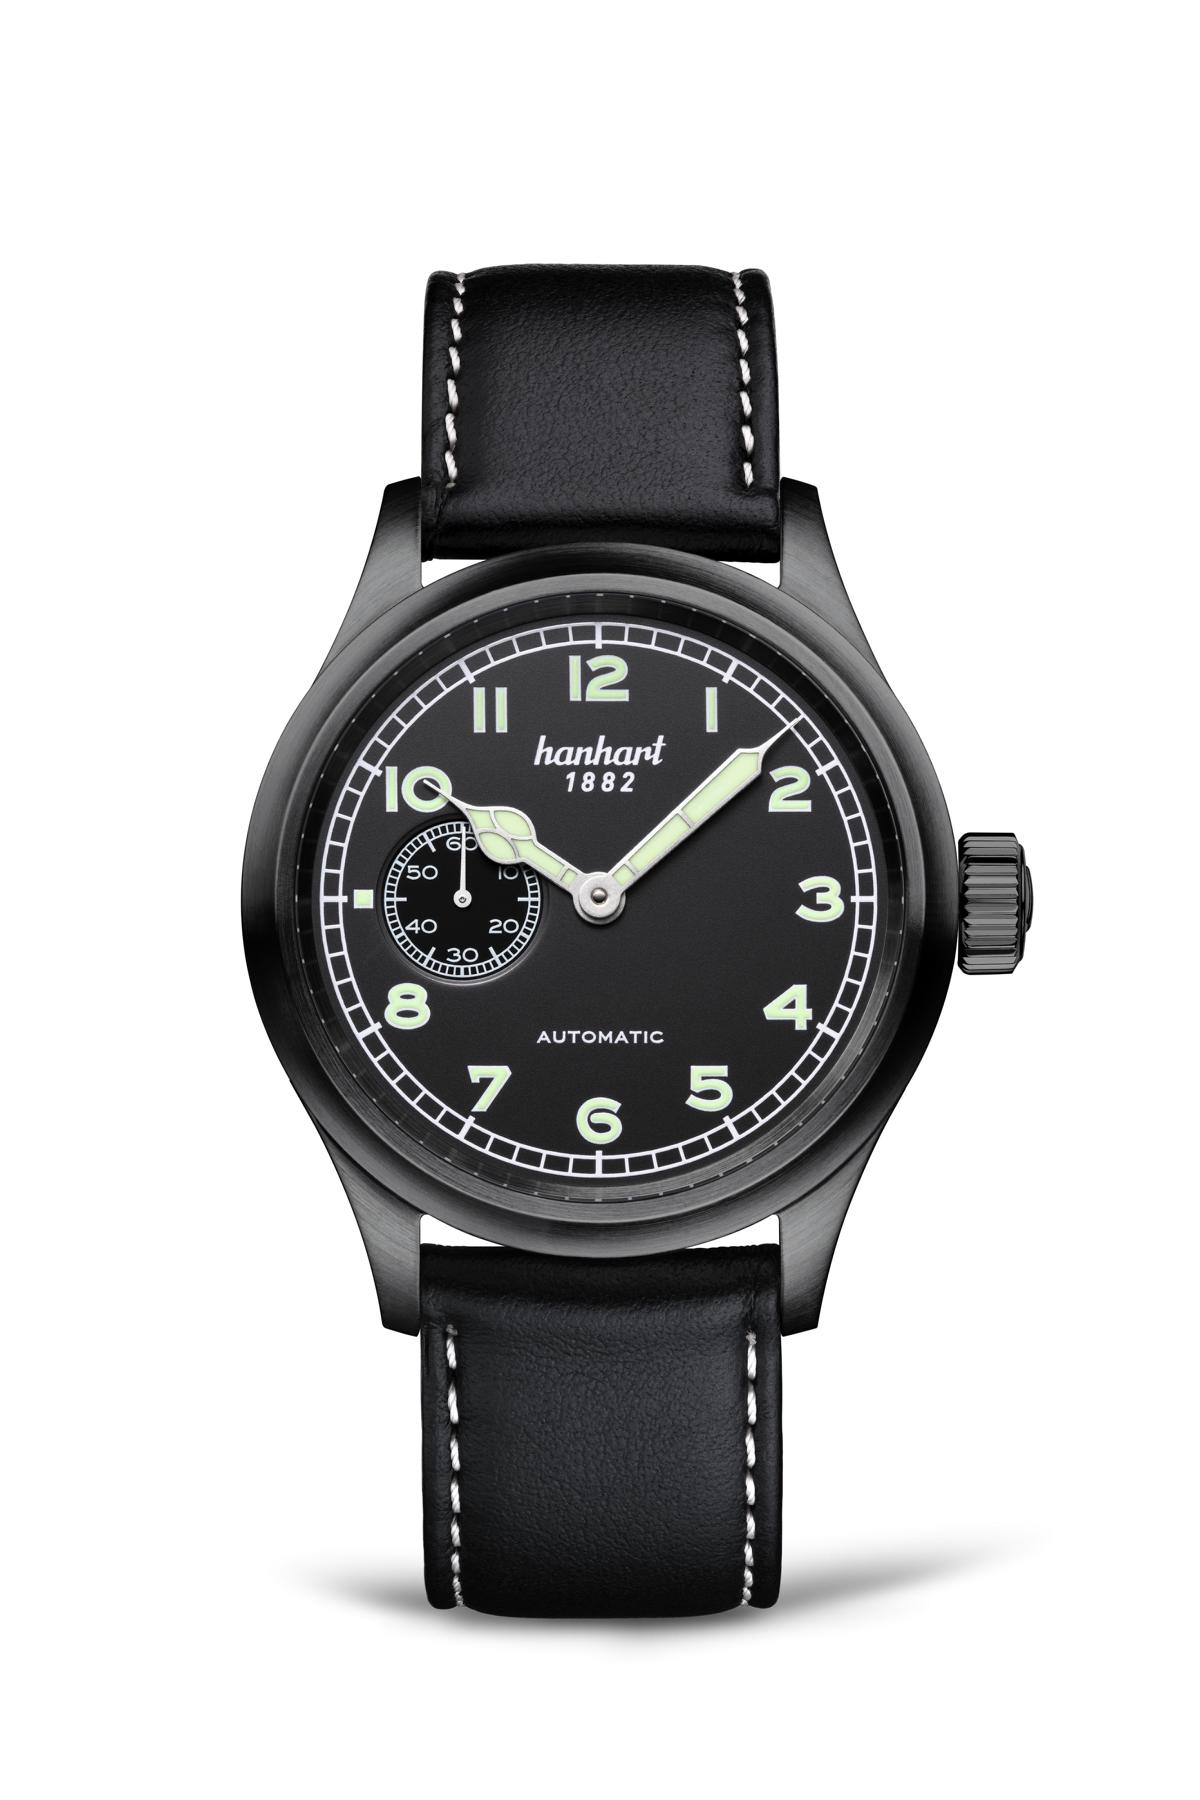 Oris GMT Rega Limited Edition Watch Hands-On